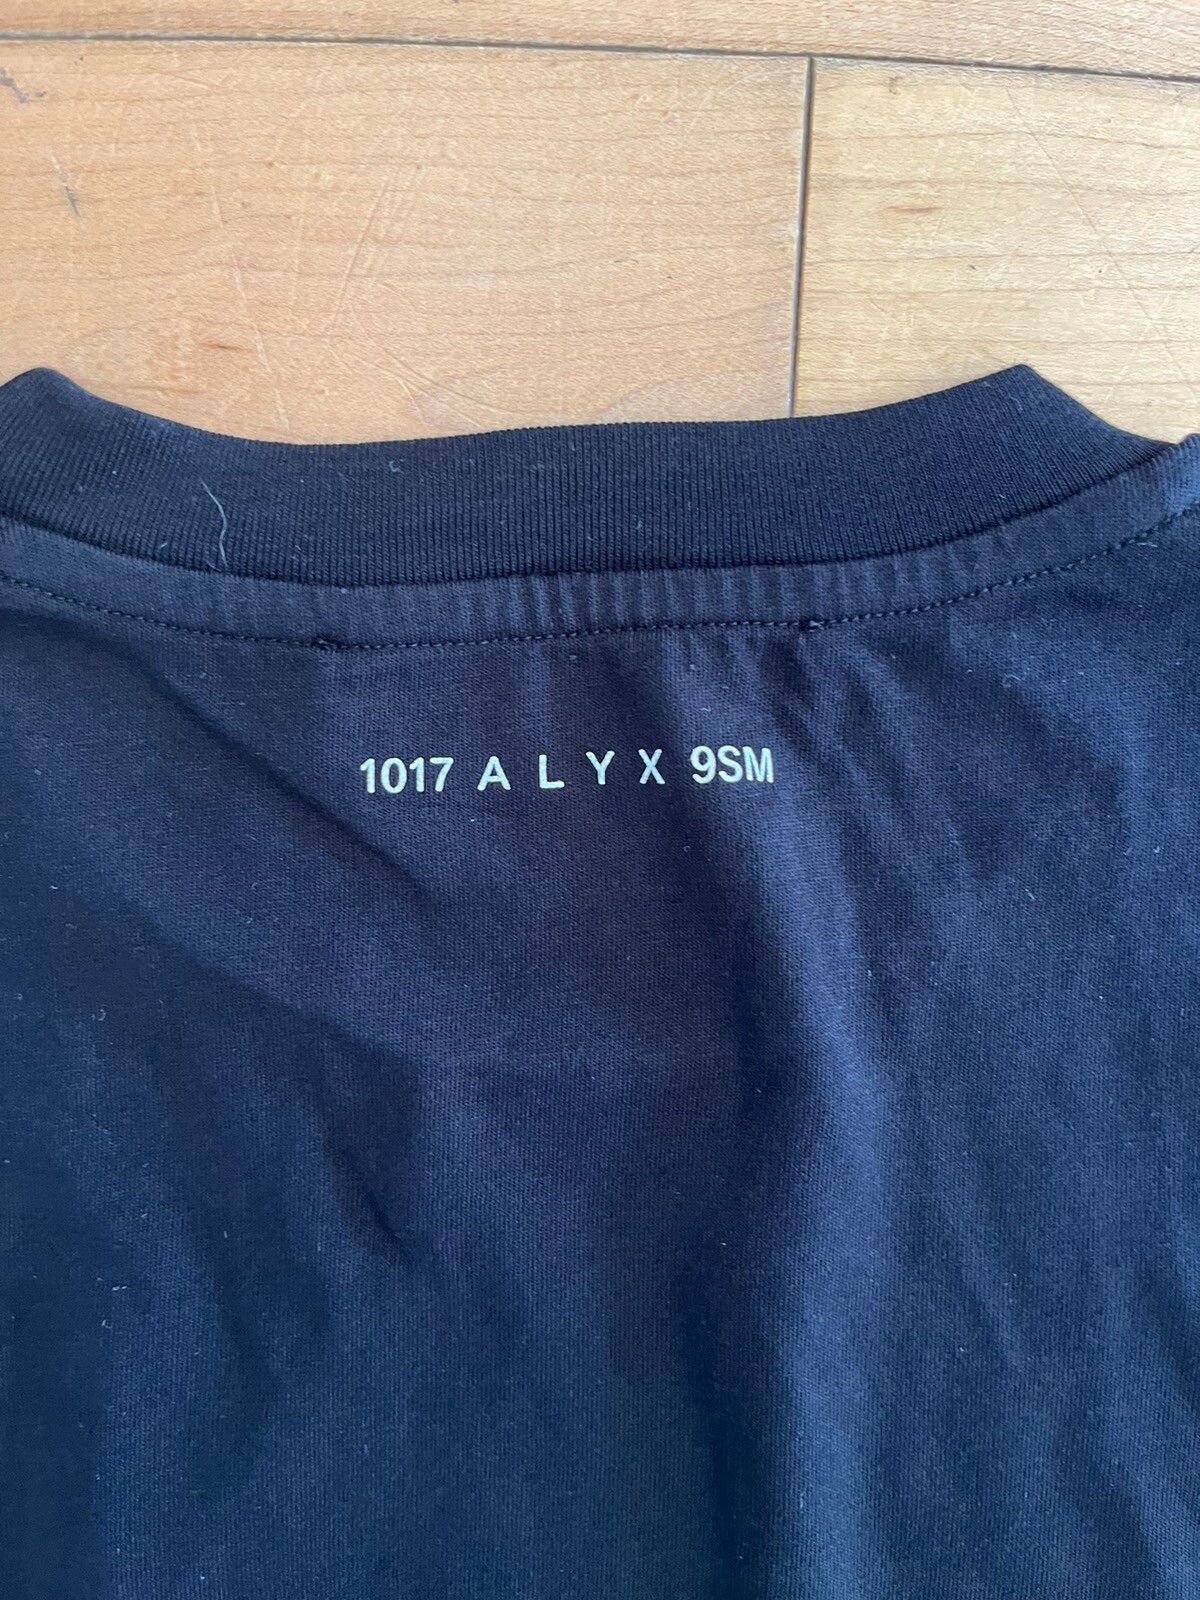 NWT - 1017 ALYX 9SM Flower s/s T-Shirt - 10